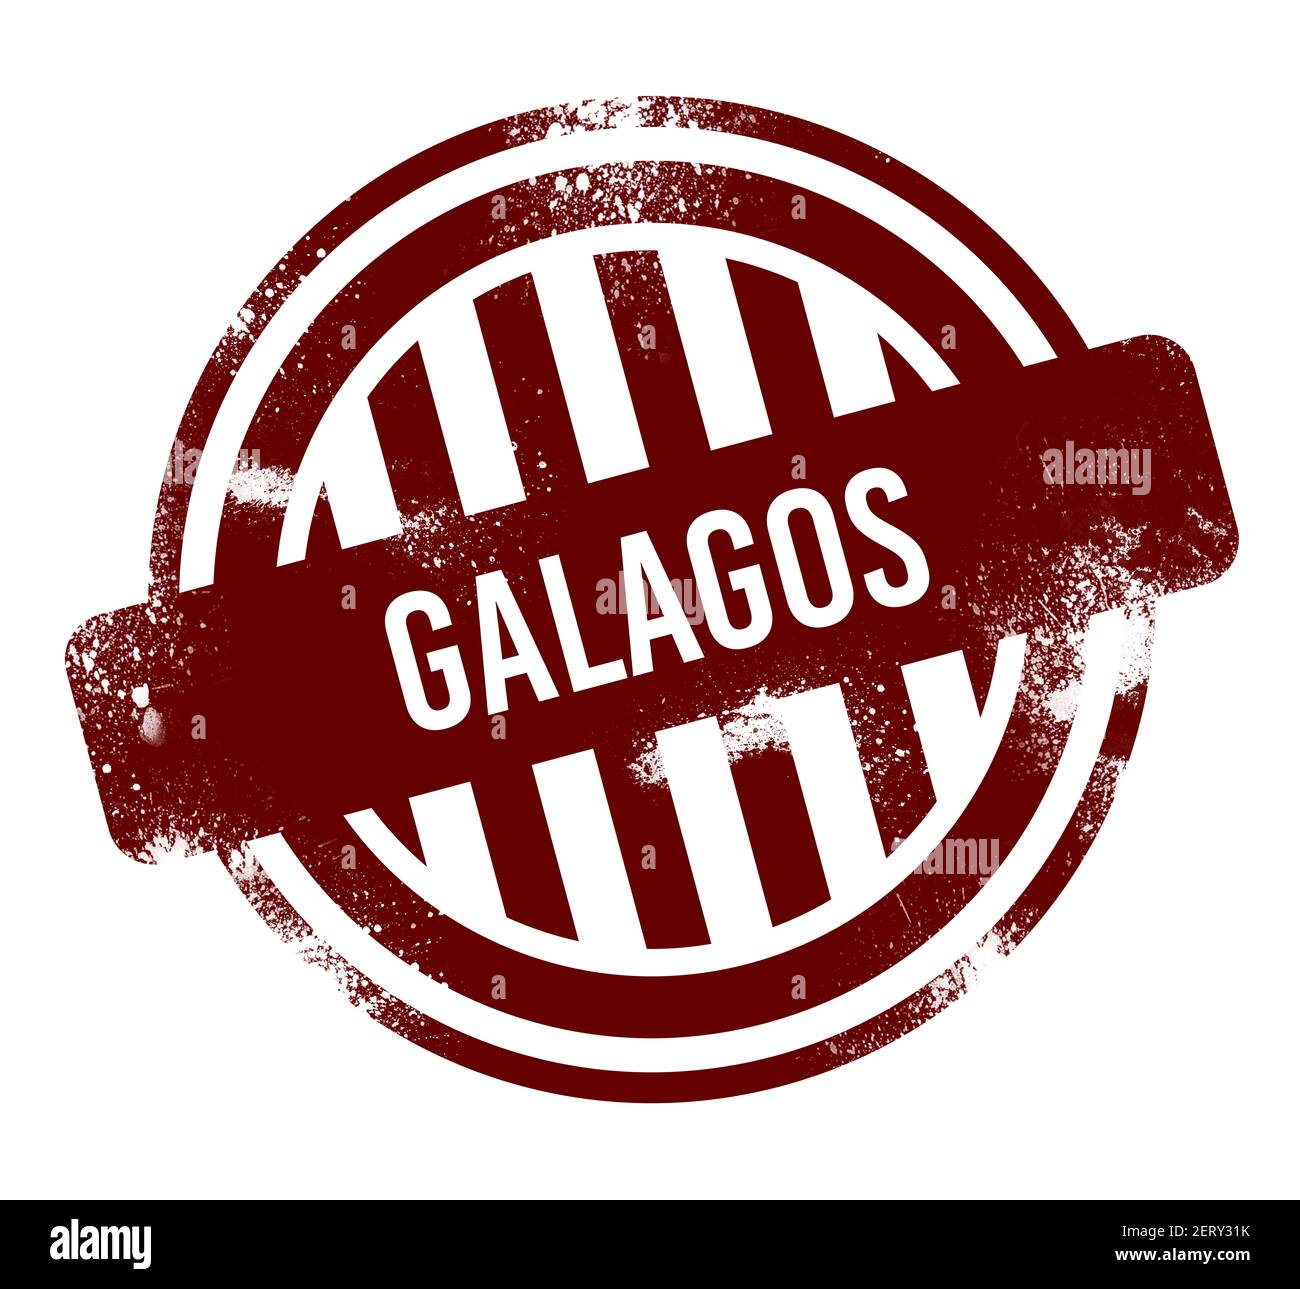 galagos - red round grunge button, stamp Stock Photo